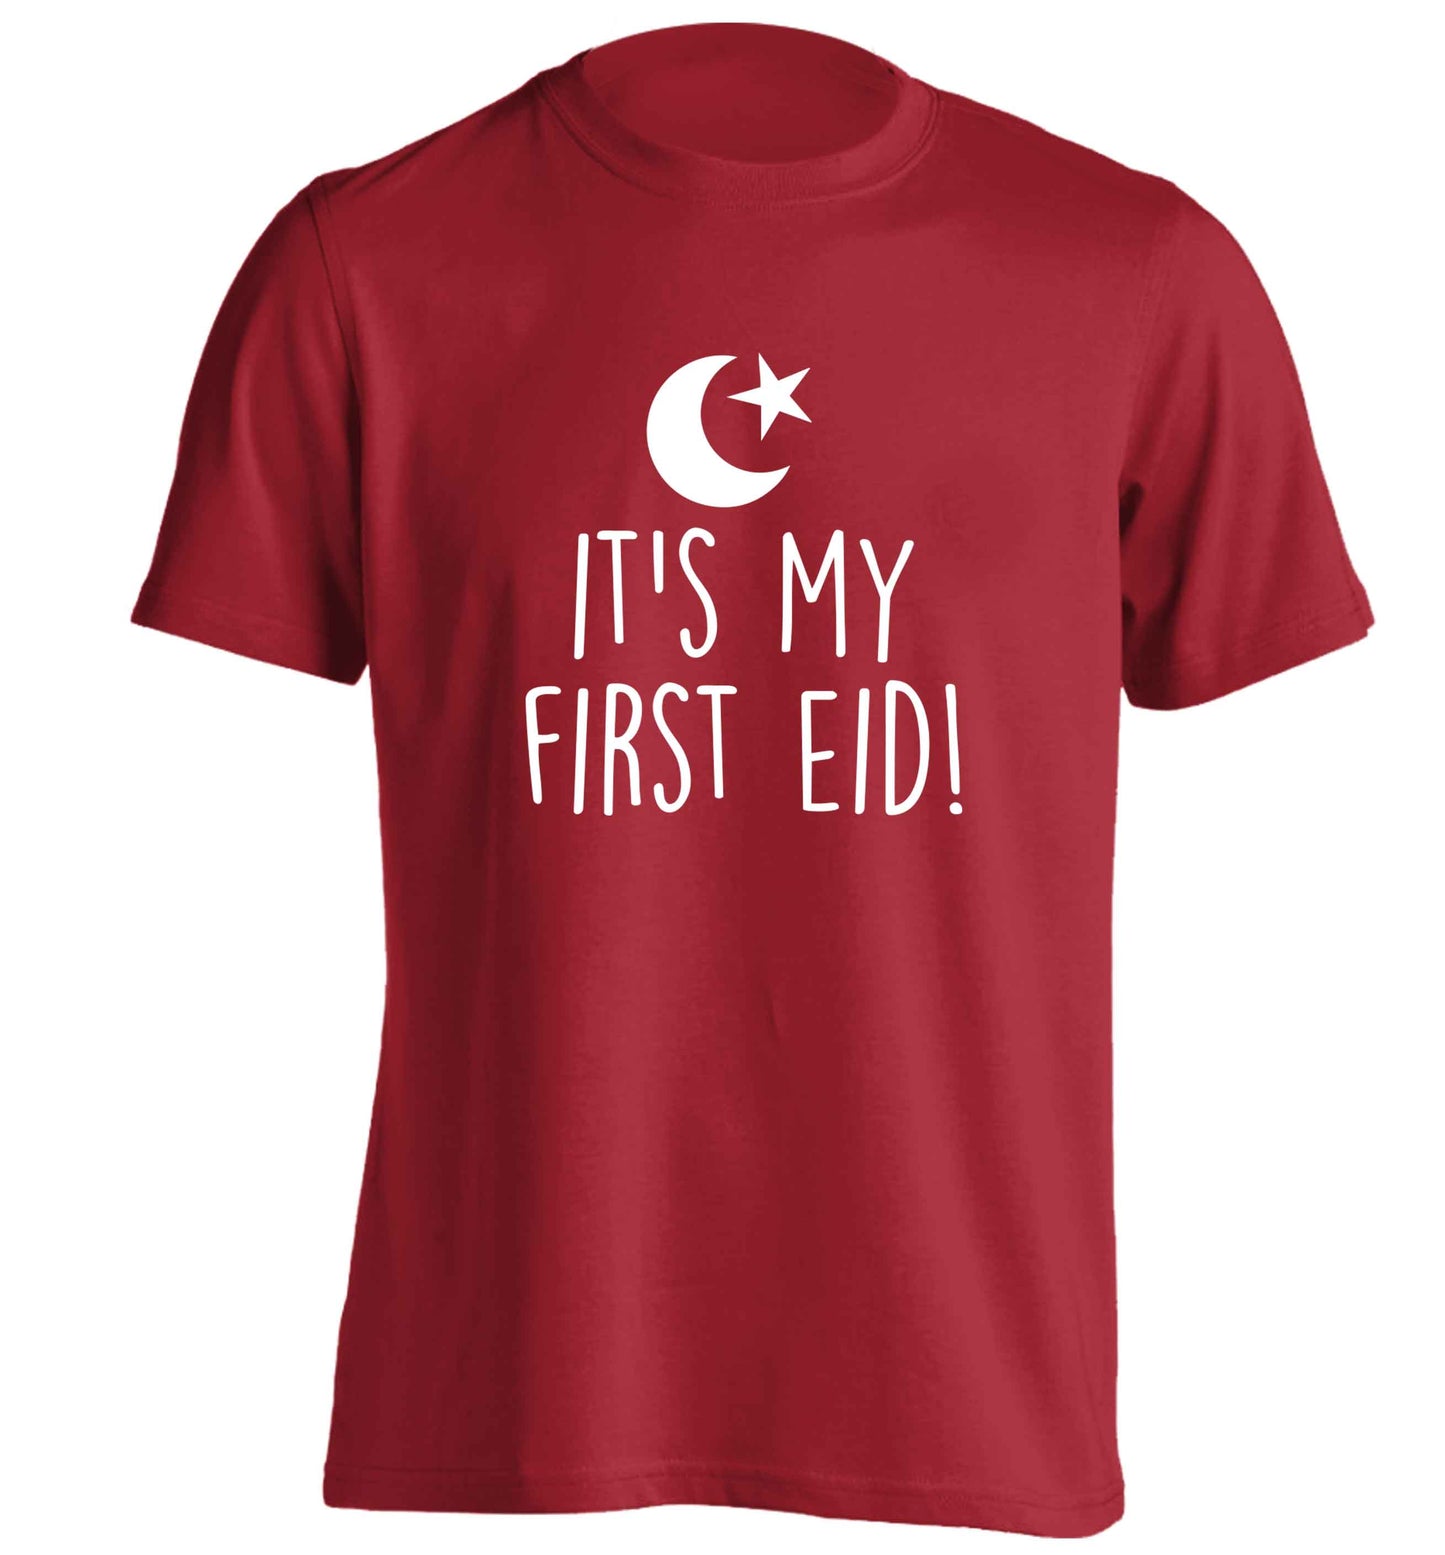 It's my first Eid adults unisex red Tshirt 2XL